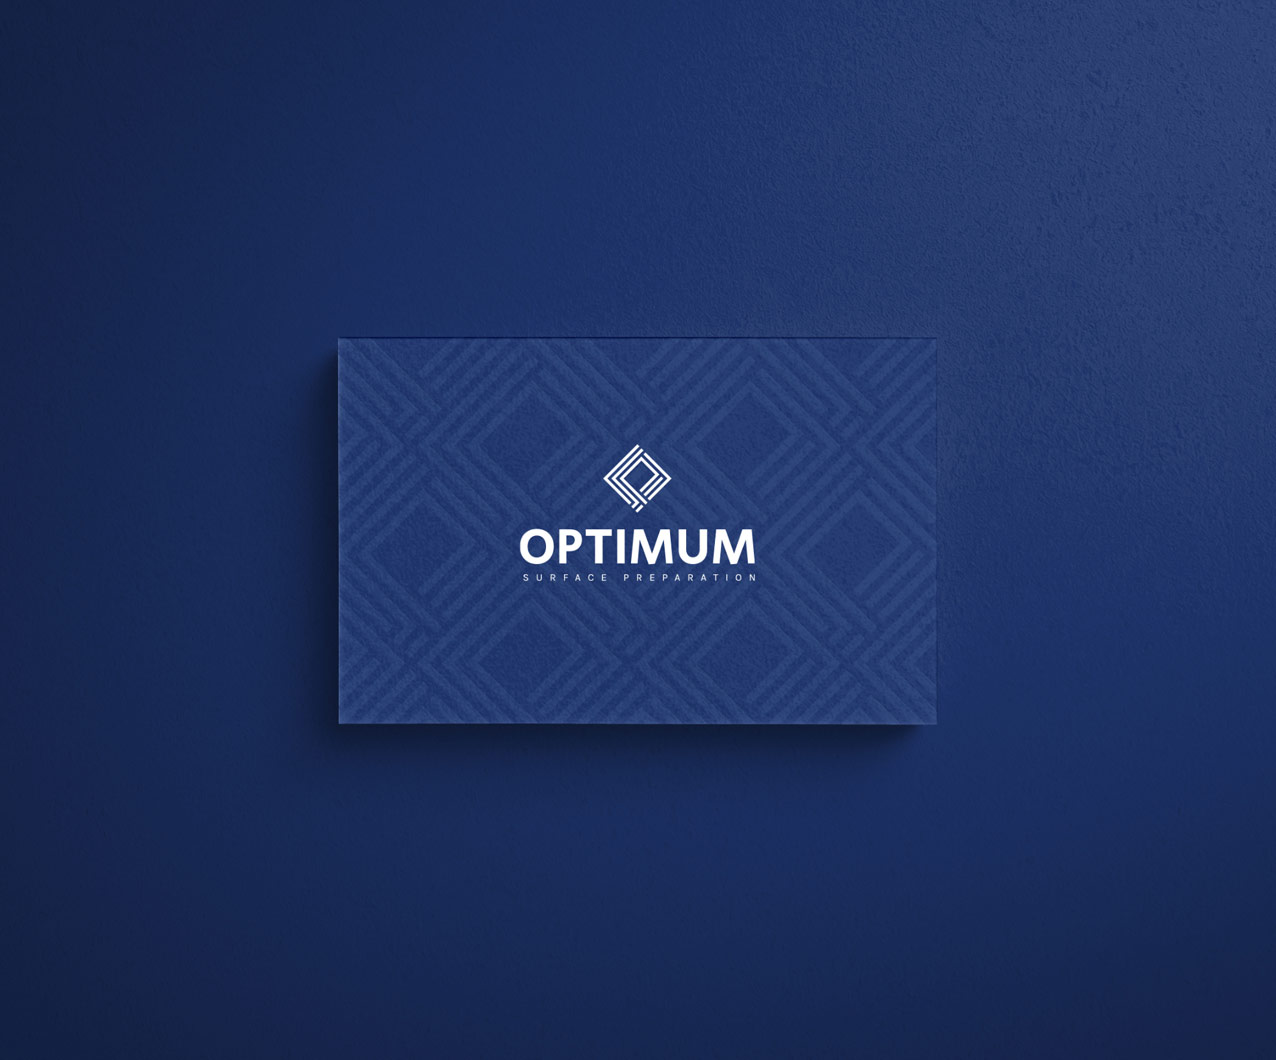 Optimum Surface Preparation business card design